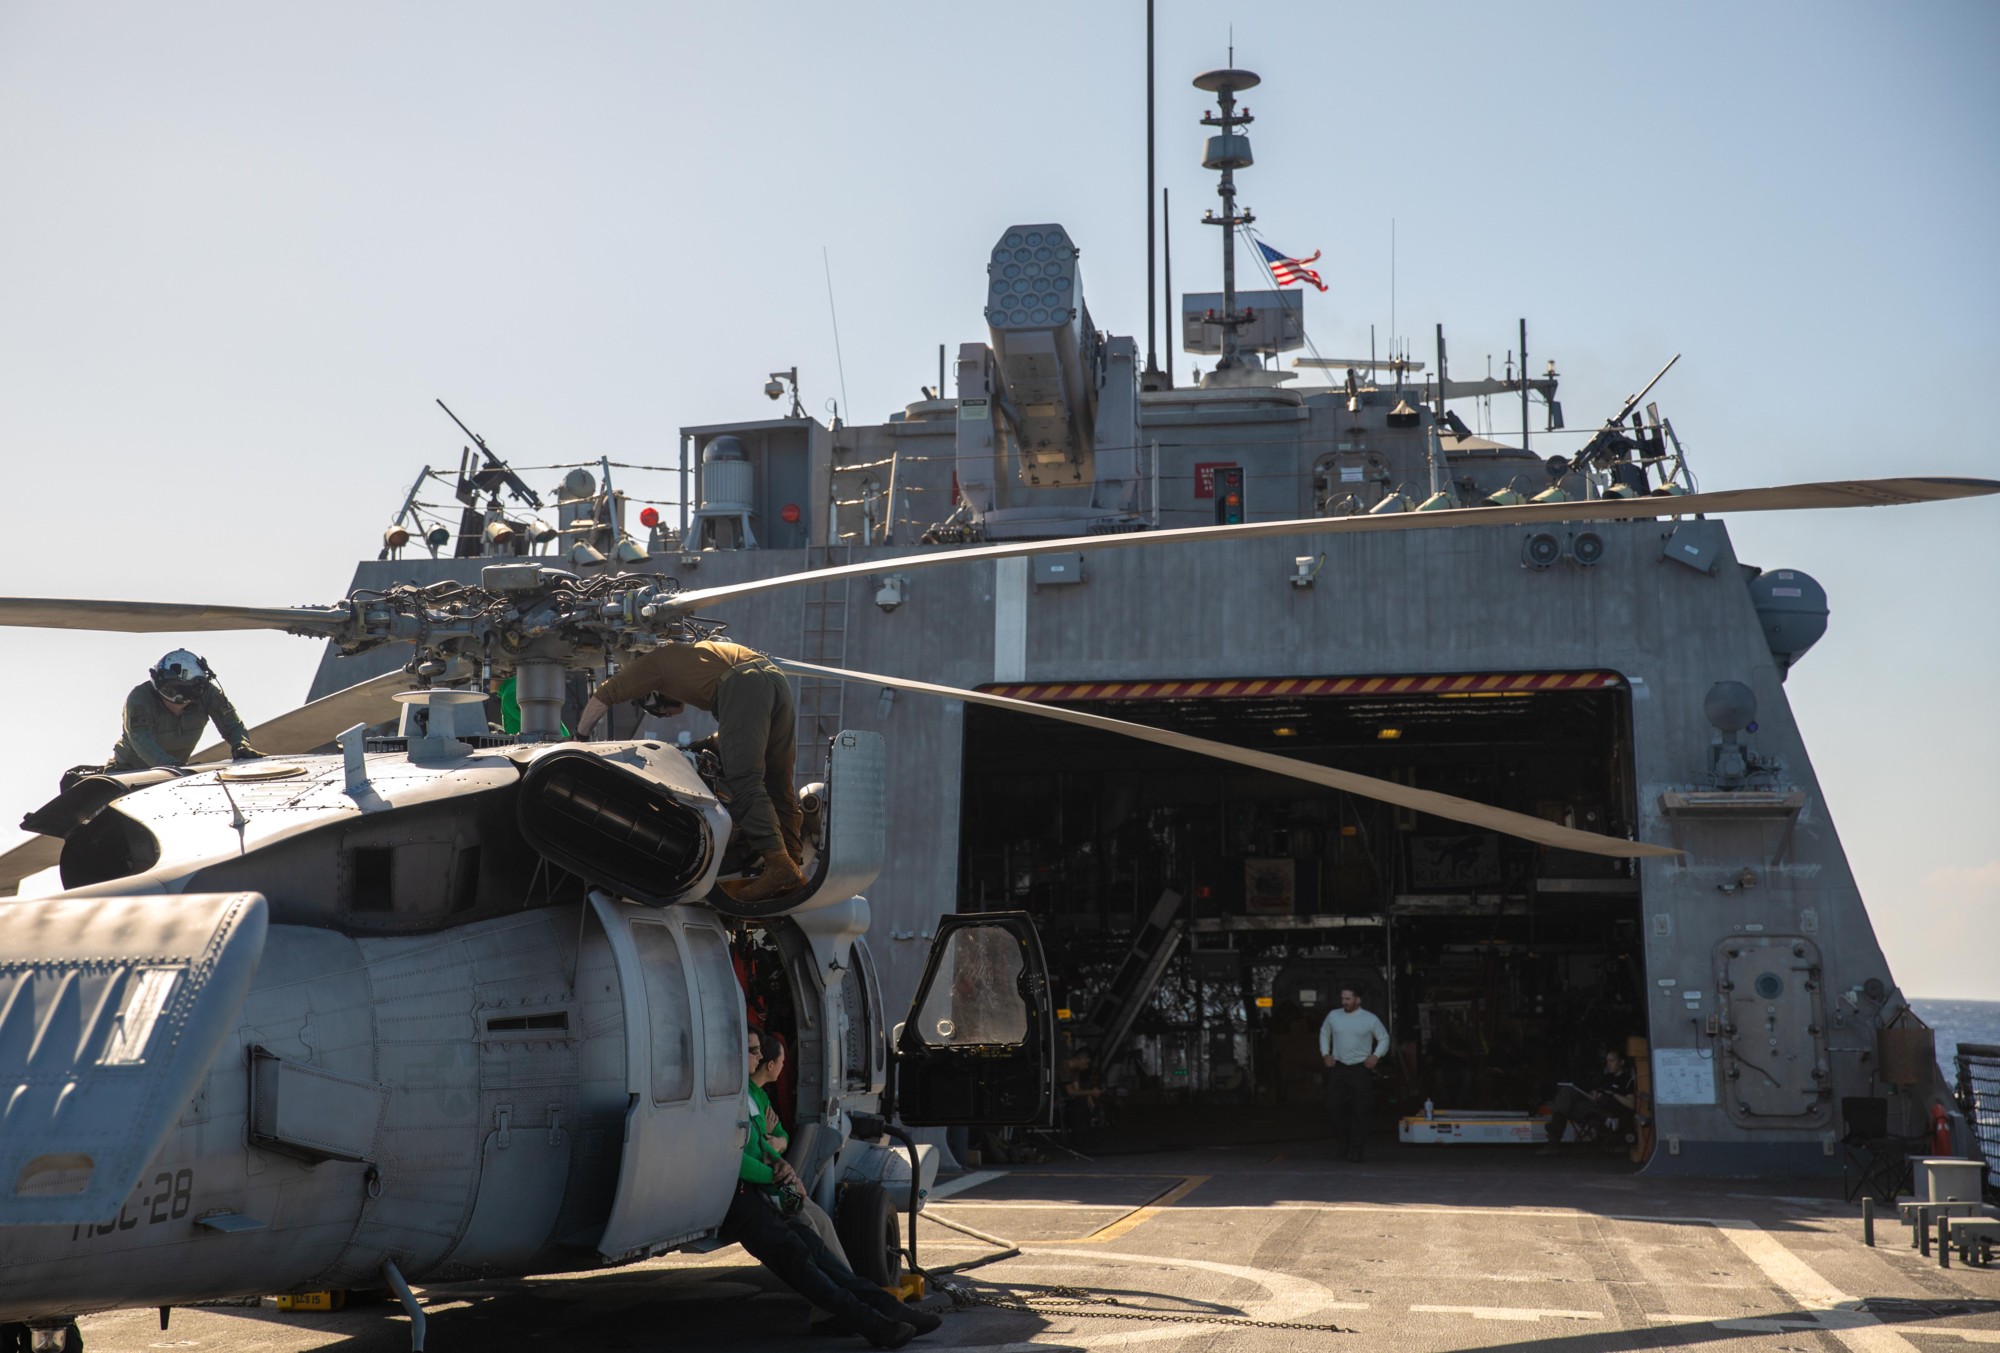 lcs-15 uss billings freedom class littoral combat ship us navy 73 mh-60s seahawk hangar